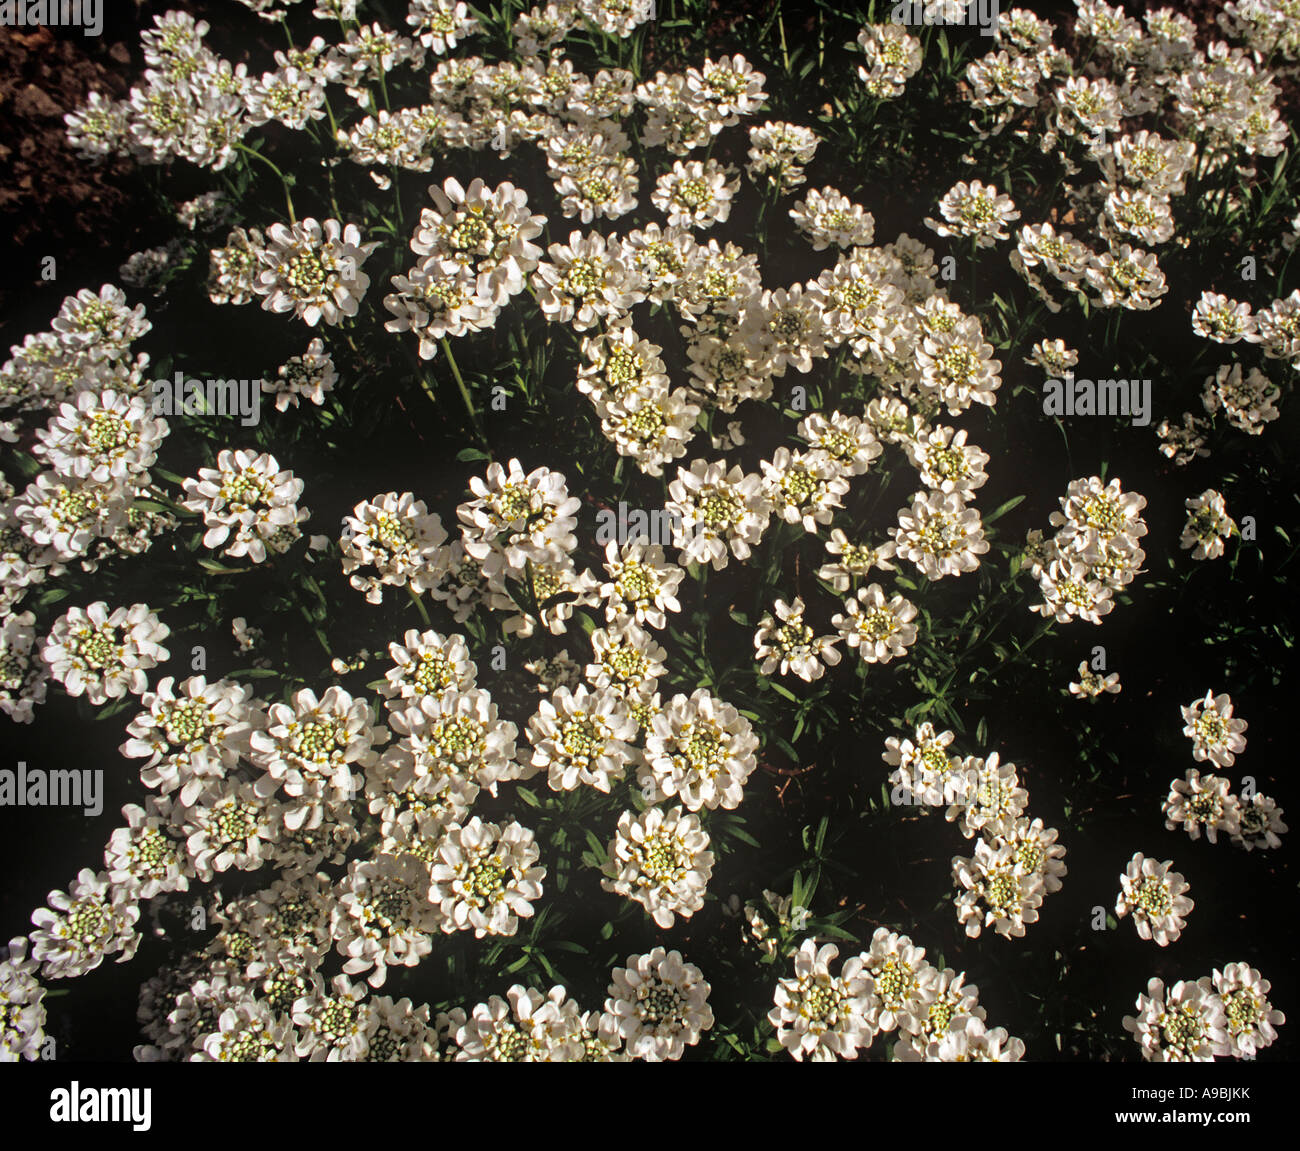 Iberis amara Candytuft comune fragranti piccoli fiori bianchi in densi ammassi annuale cespuglioso Foto Stock